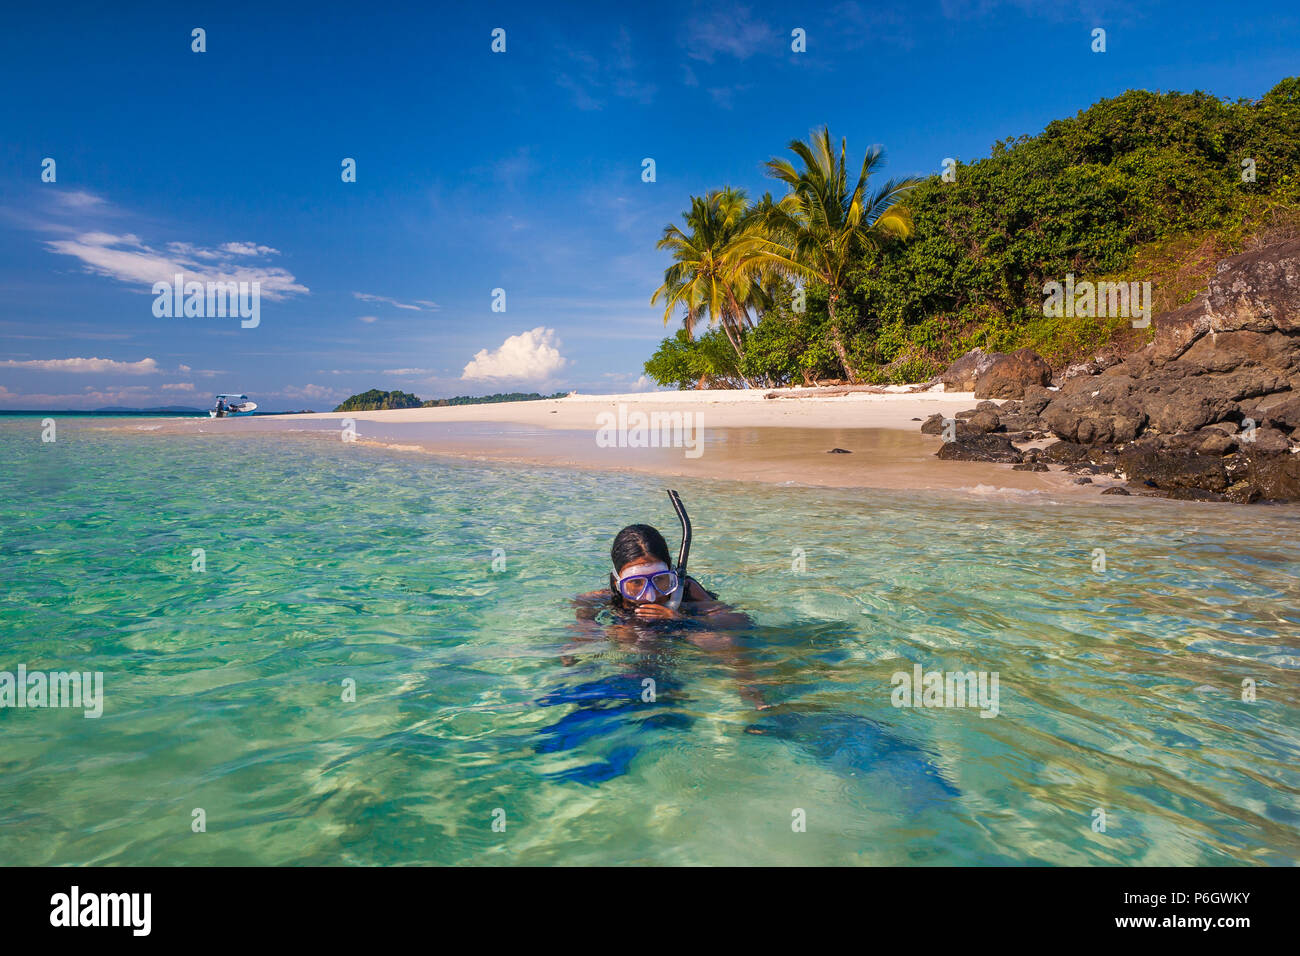 Scuba diving at Coiba island national park, Pacific coast, Veraguas province, Republic of Panama. Stock Photo